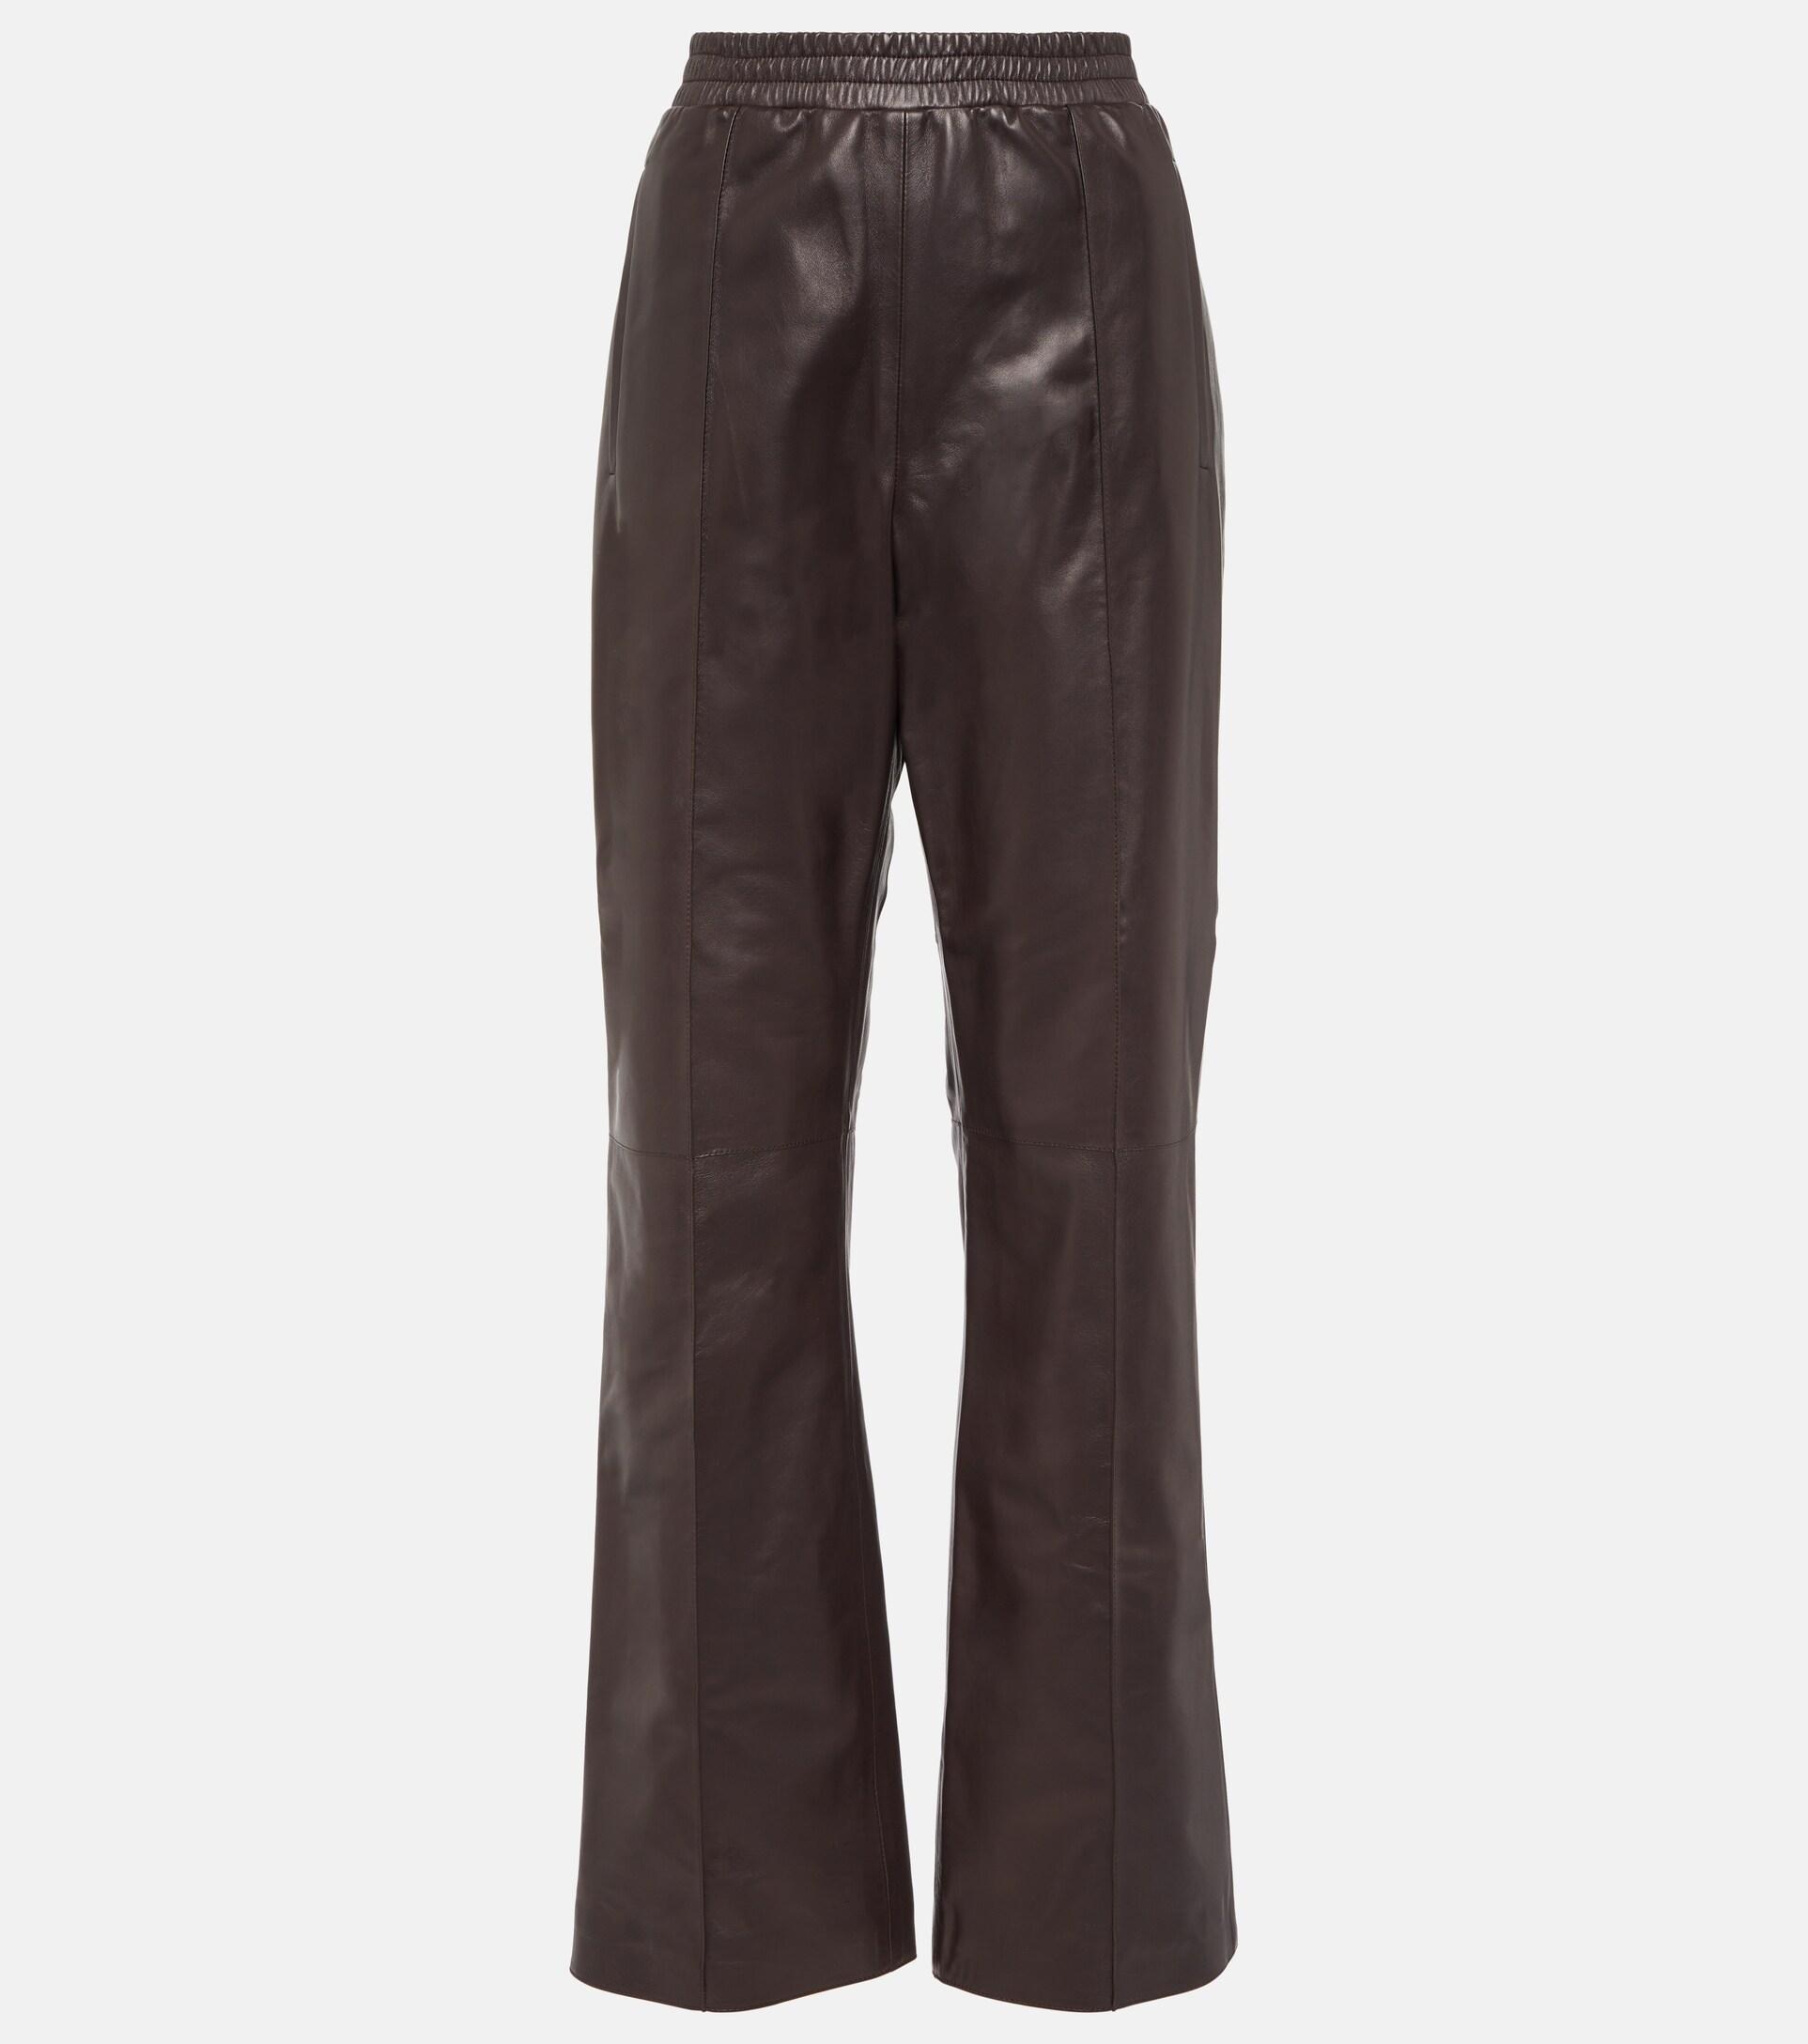 Loewe Flared Leather Pants in Brown | Lyst